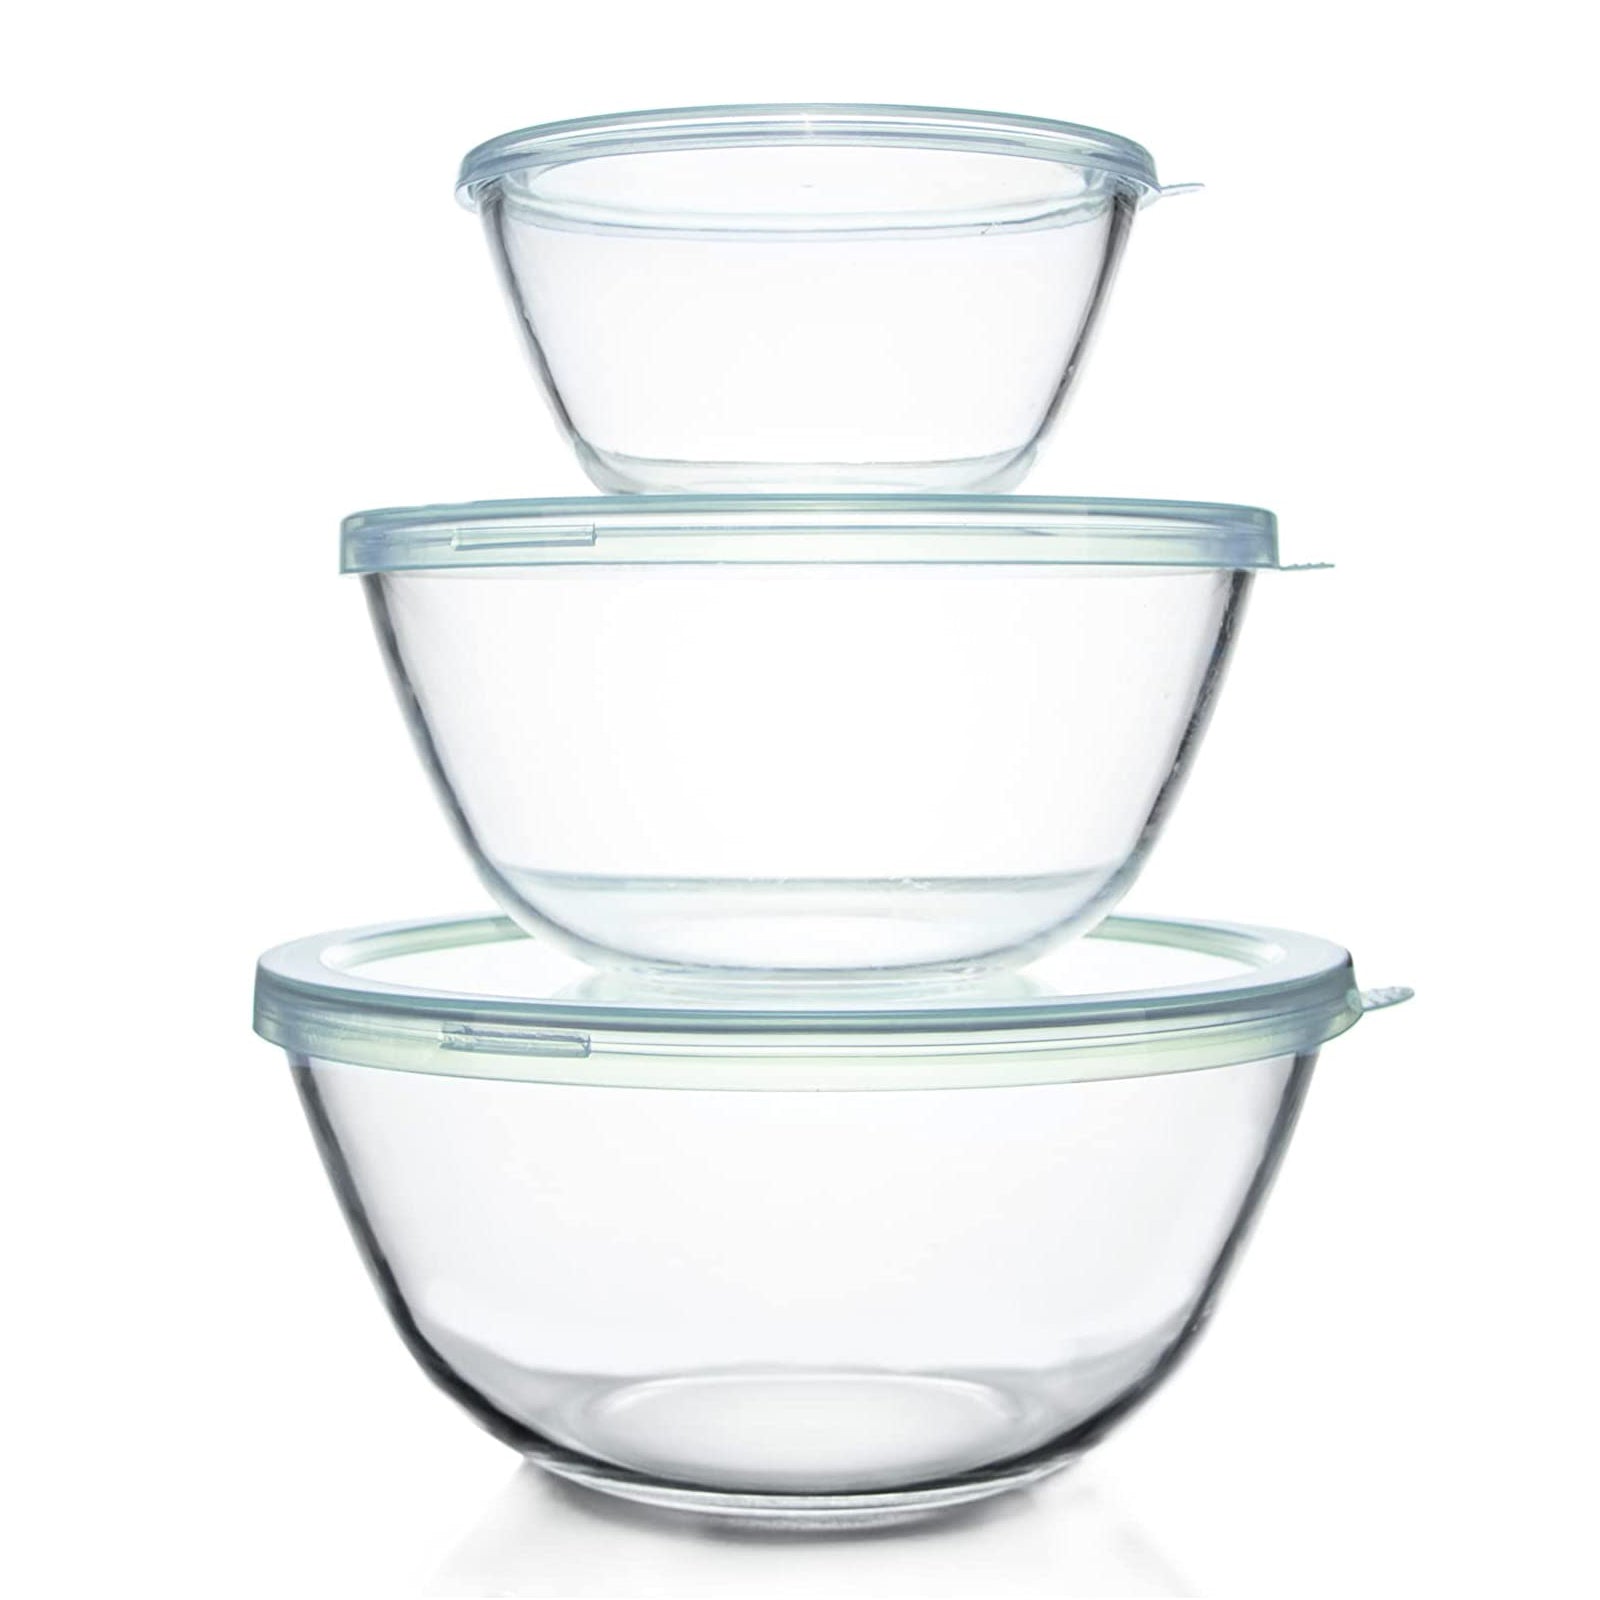 1.5 Quart Glass Mixing Bowl